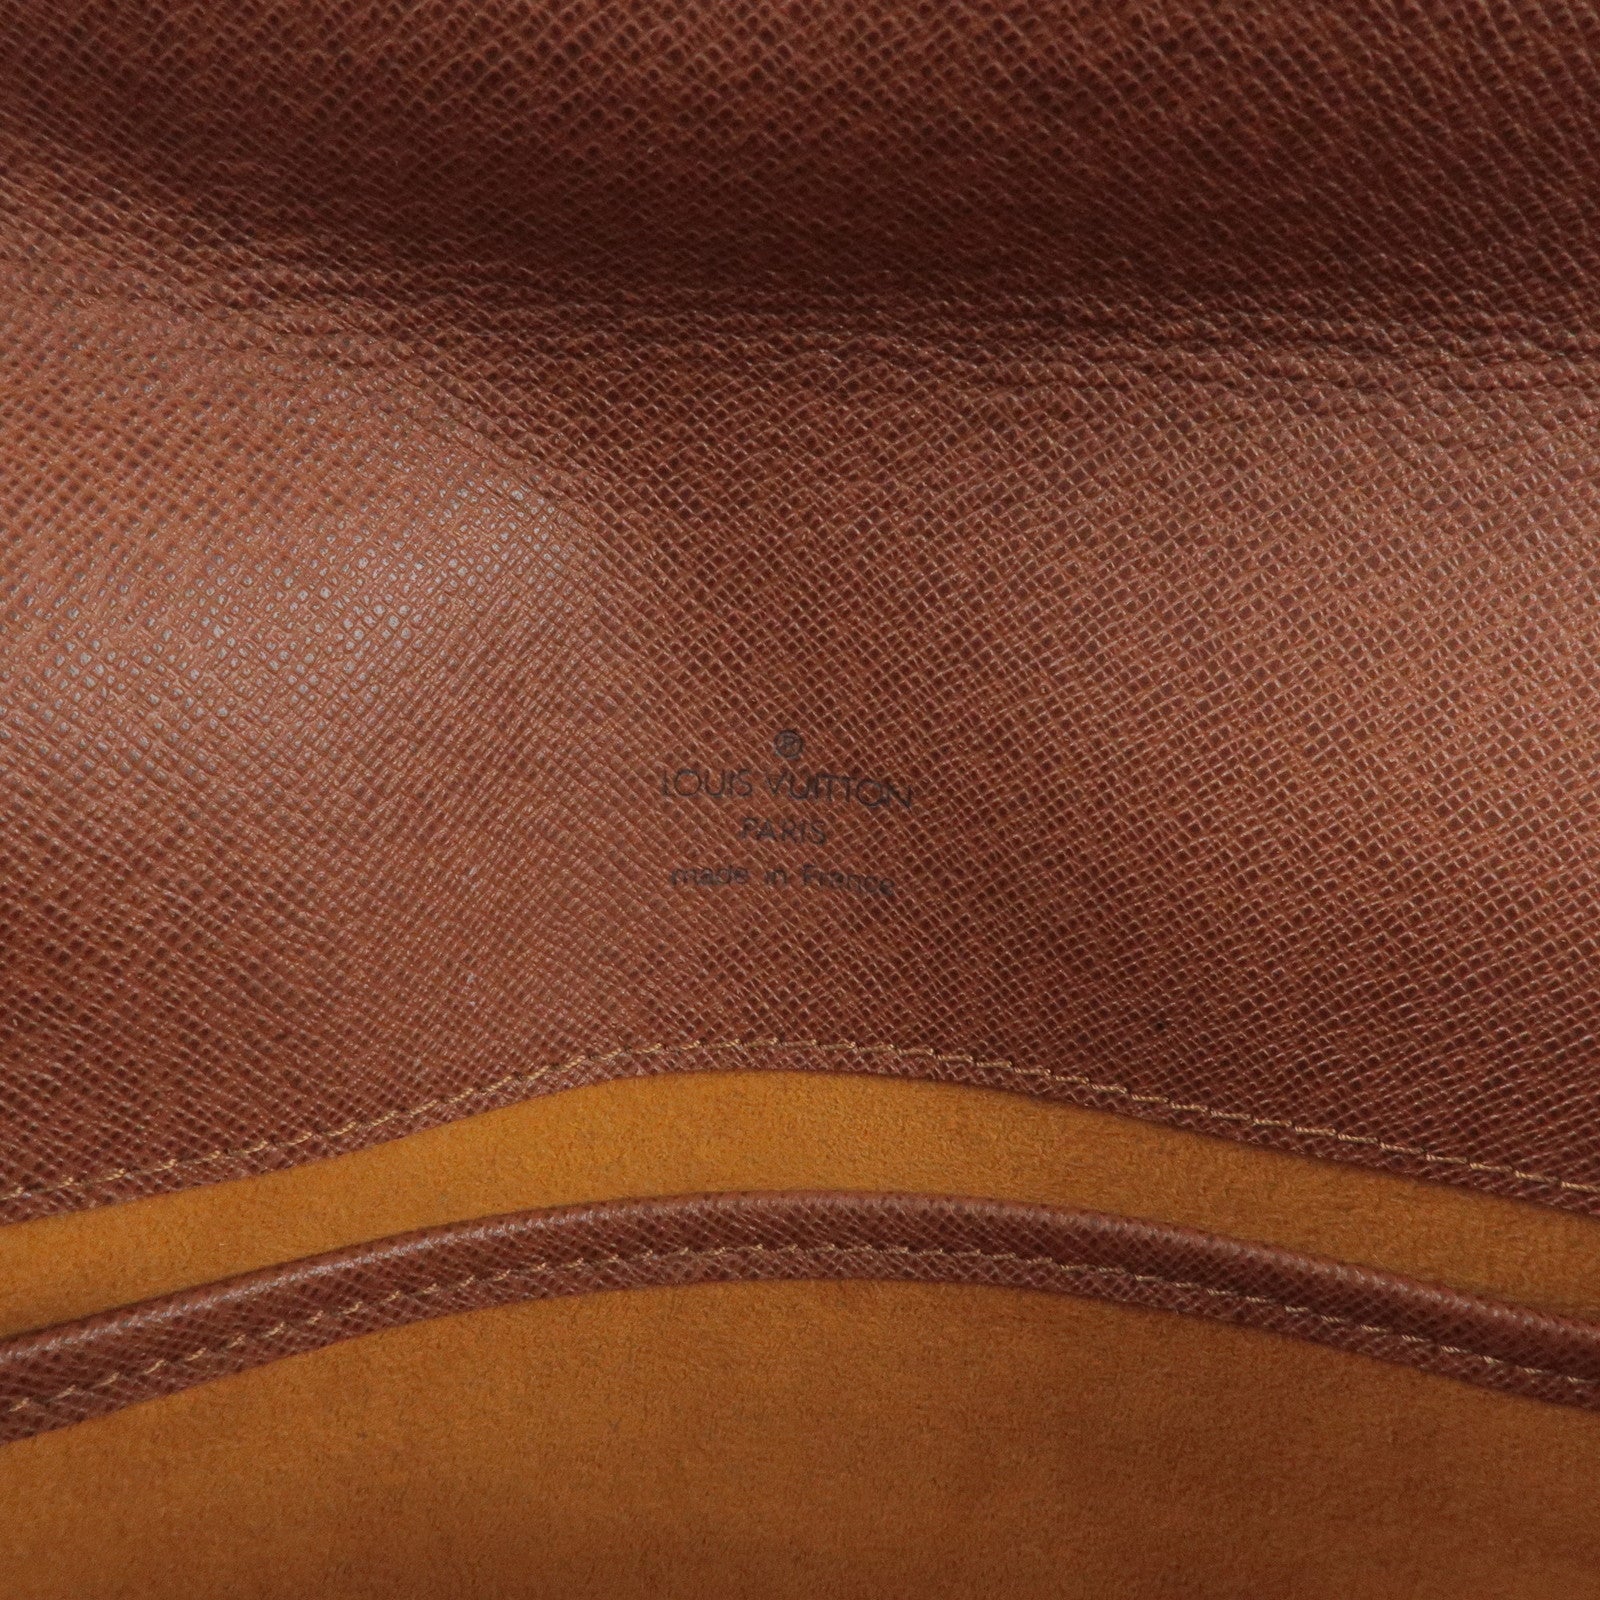 Bag - Shoulder - Jaden Smith wearing Louis Vuitton - Louis - M51257 – Louis  Vuitton America's Cup shoulder bag in blue monogram canvas and natural  leather - Tango - Vuitton - Musette - Short - Monogram